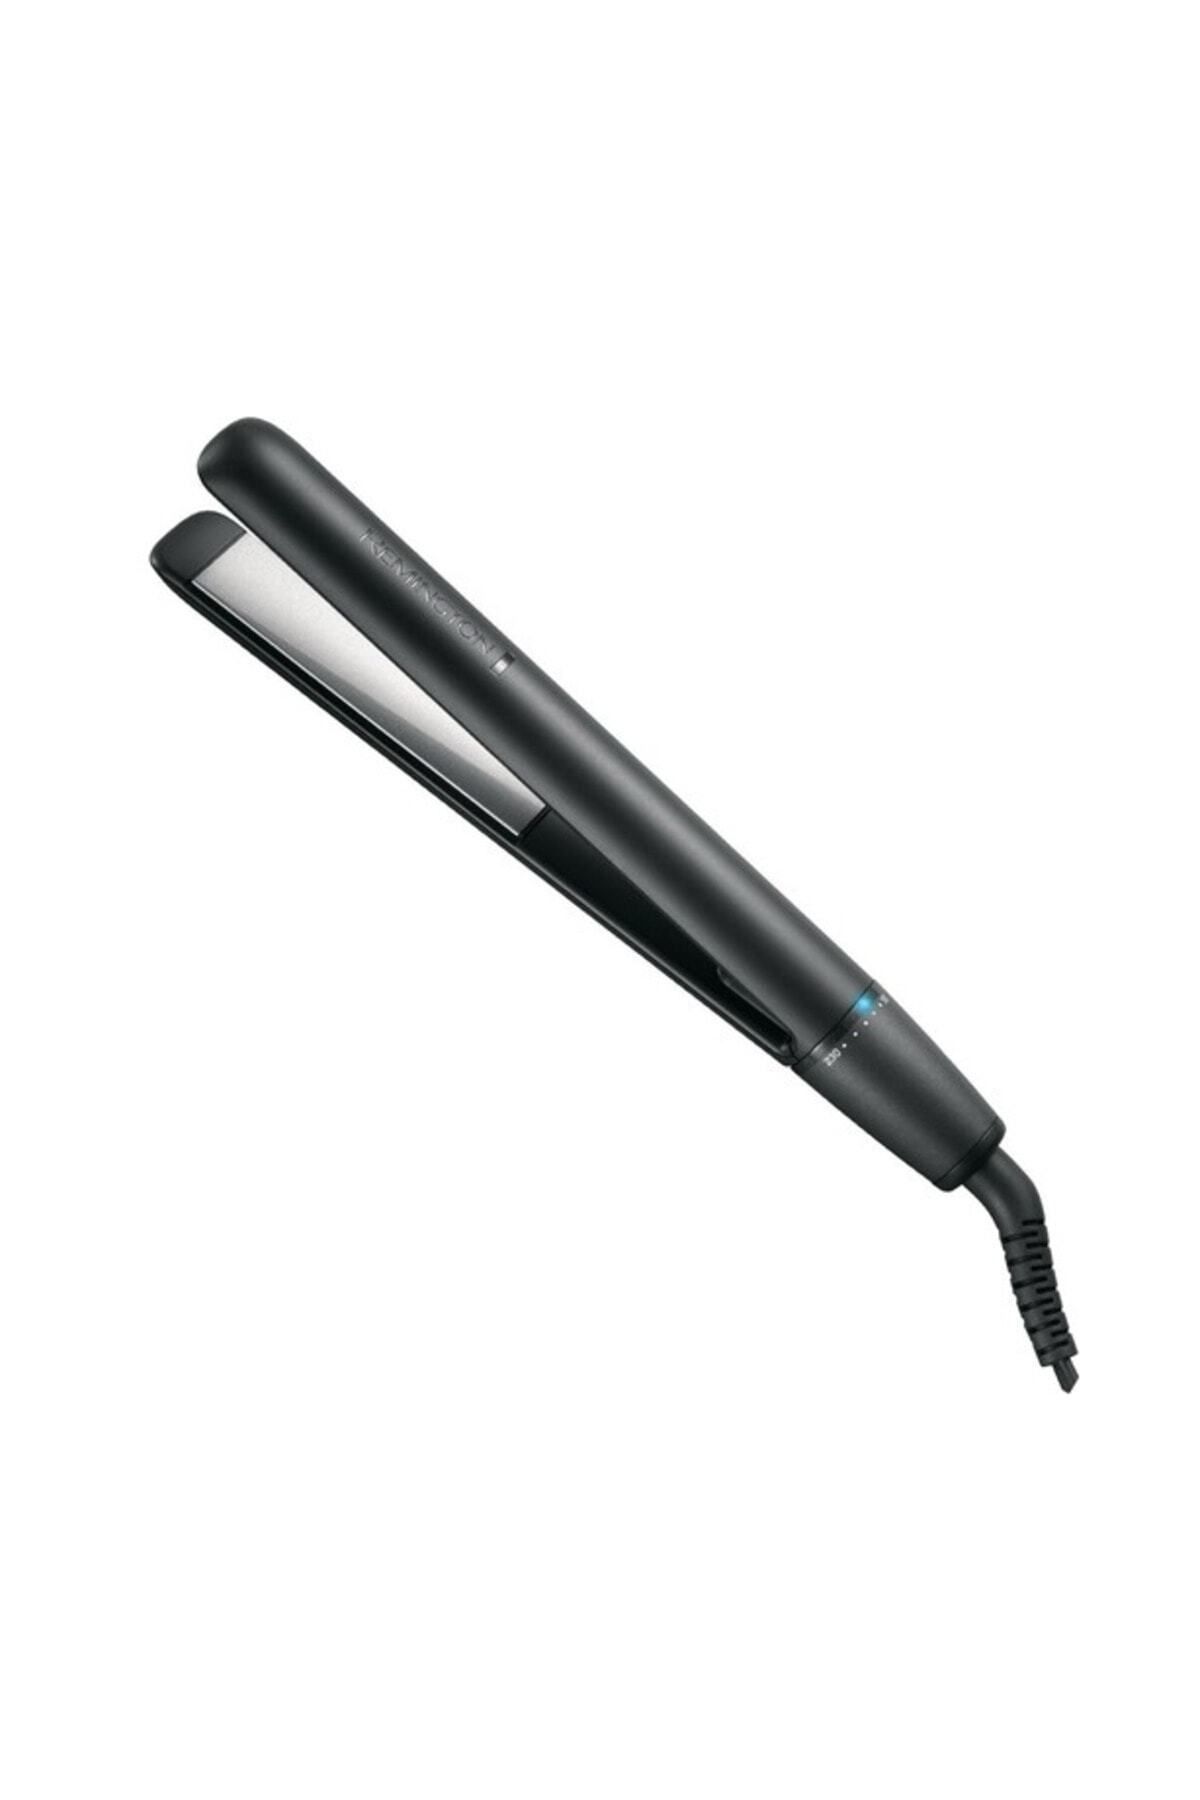 Remington Ceramic Glide Titanyum Seramik Saç Düzleştiricisi S3700